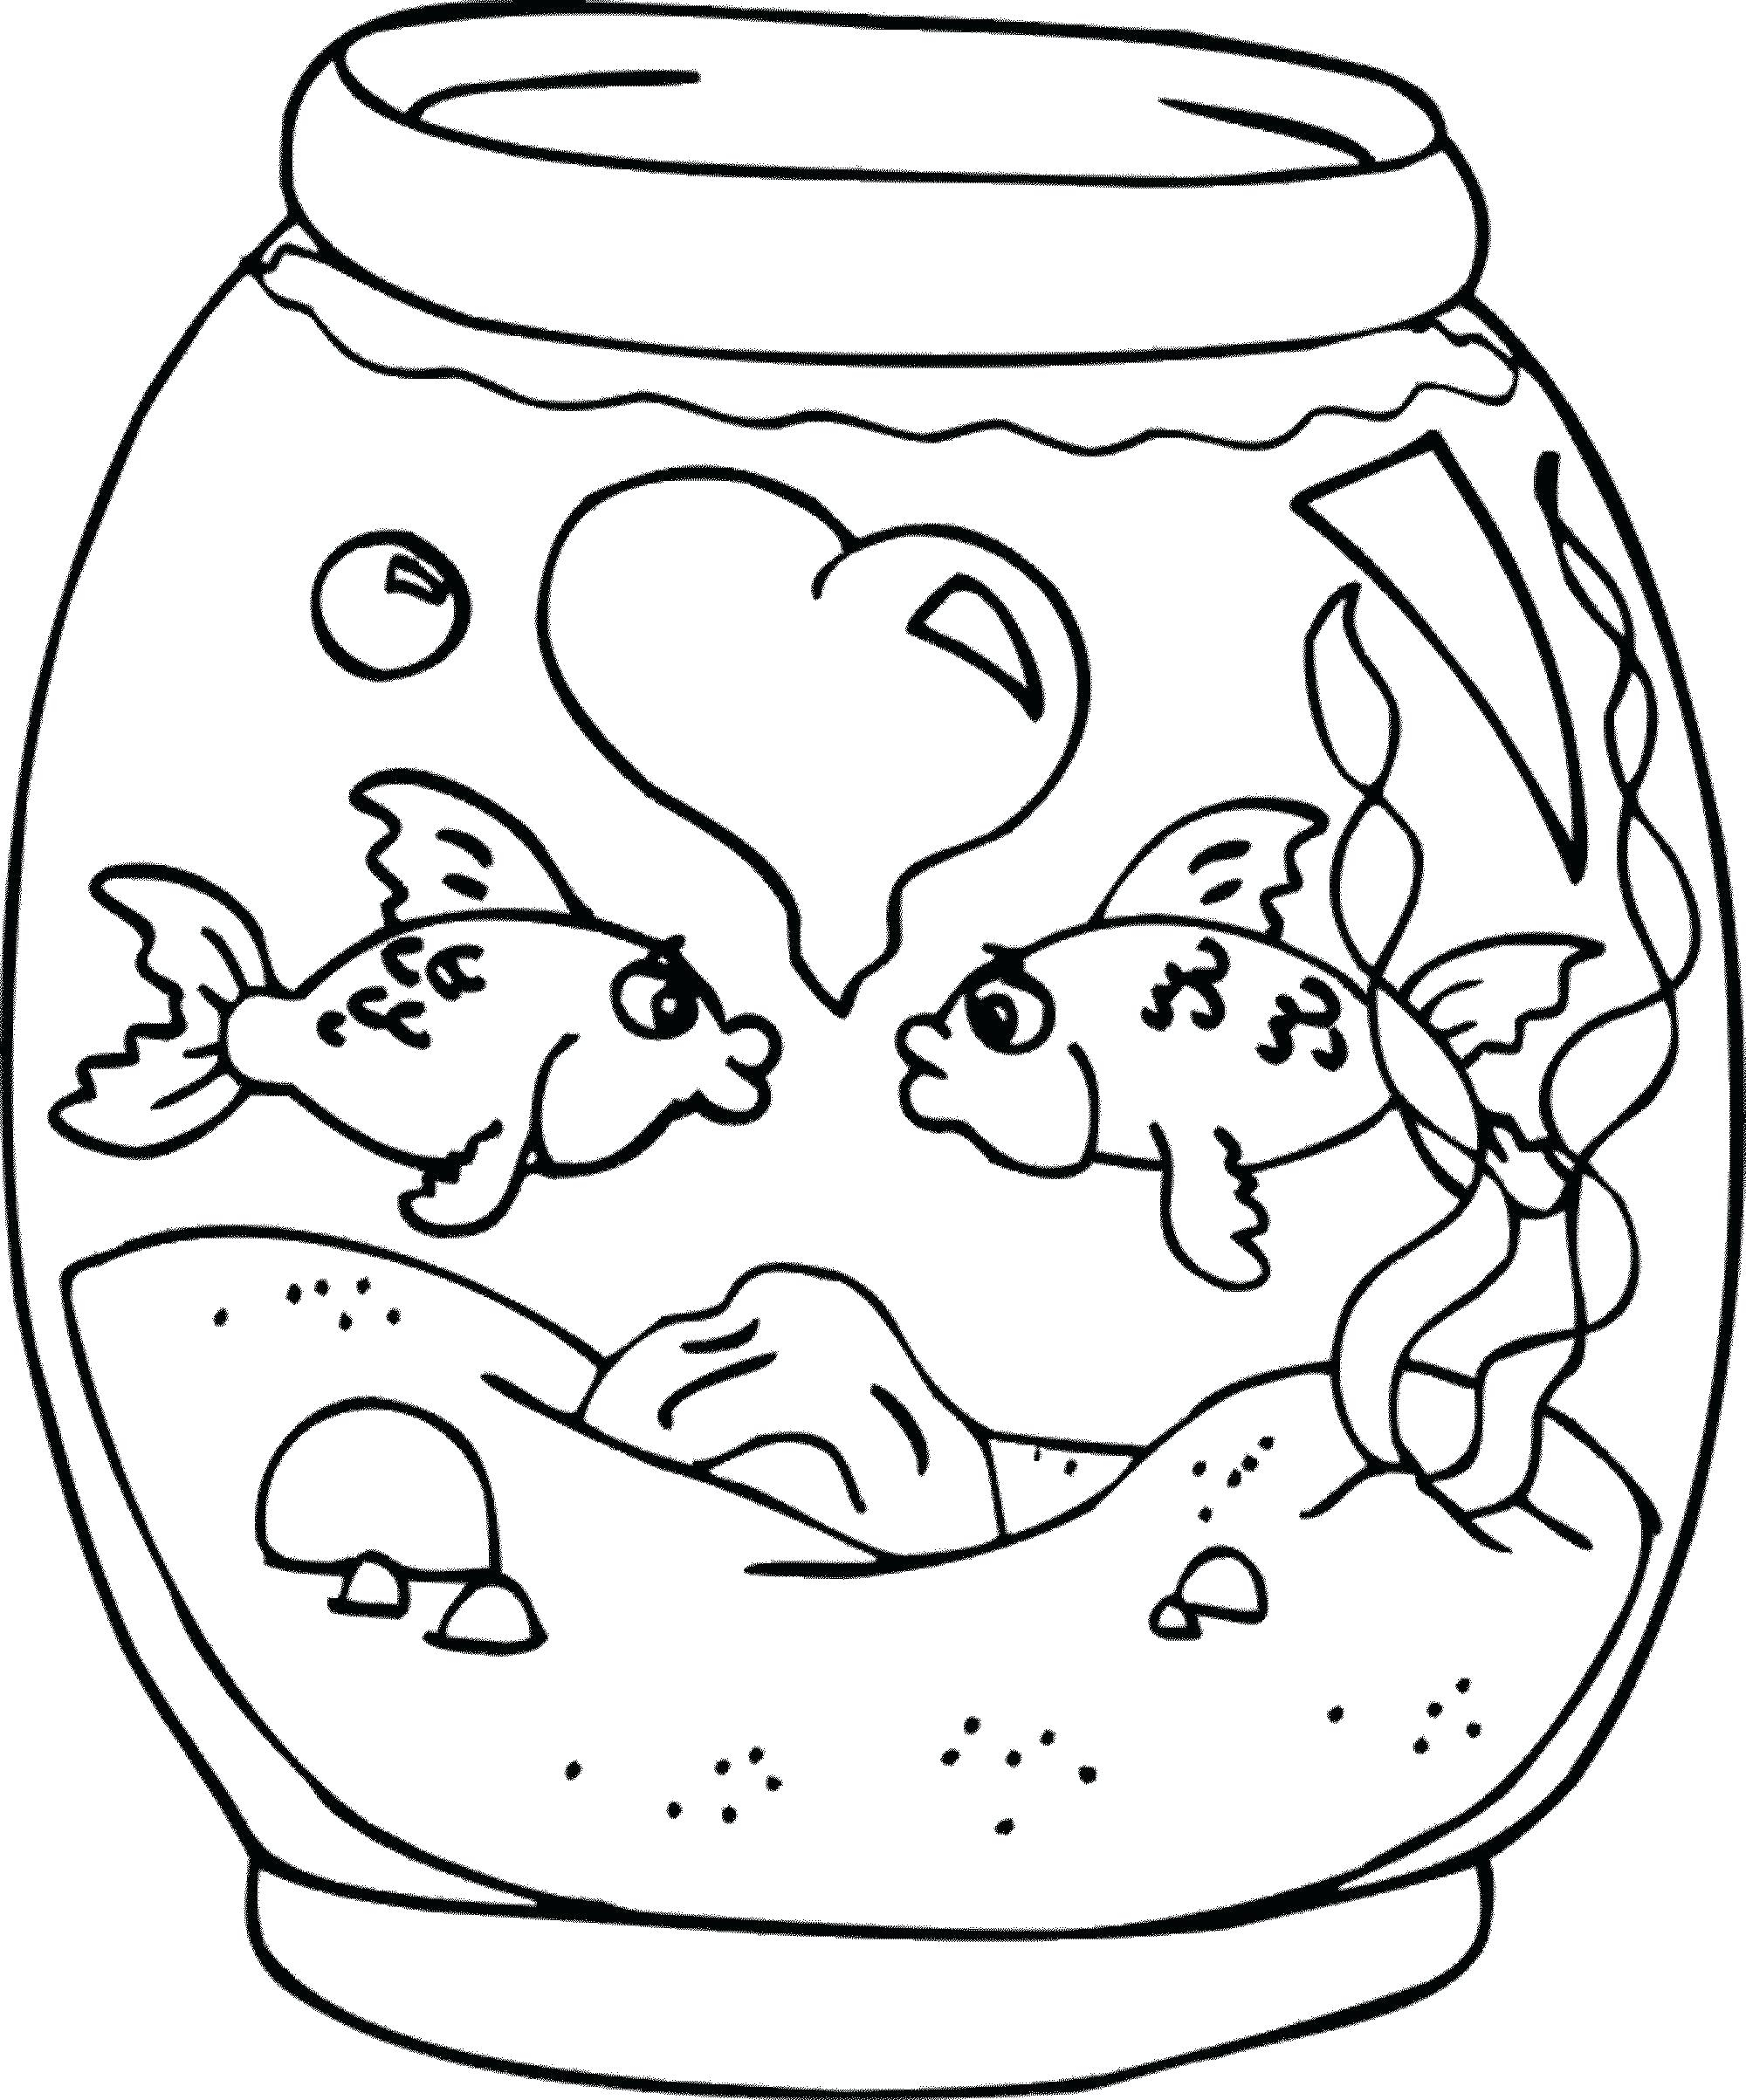 Aquarium Coloring Pages Fish Tank Coloring Page Aquarium Coloring Page Fish Tank Coloring